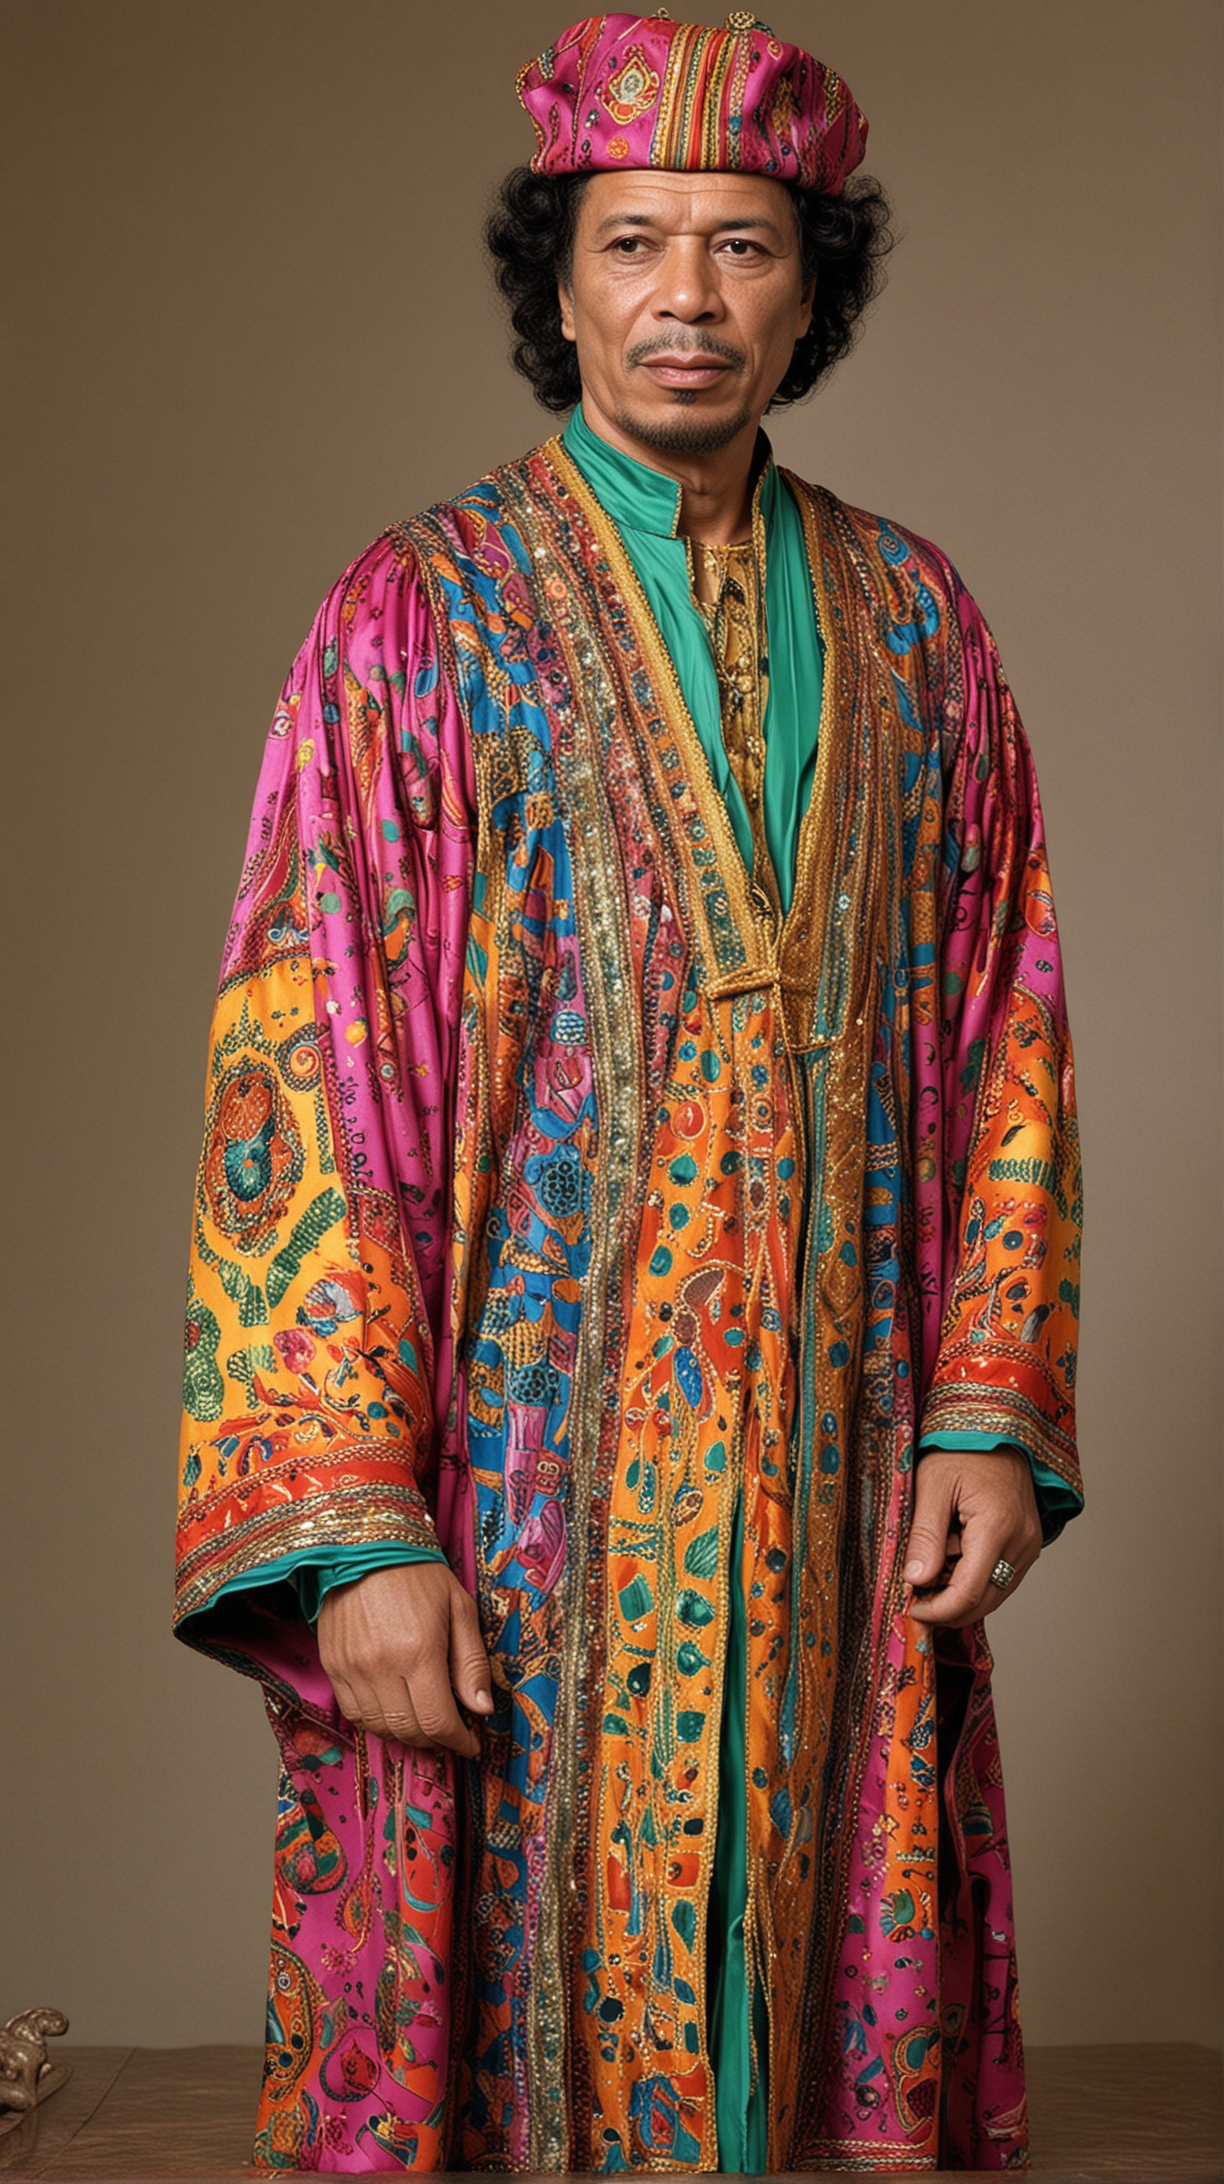 Muammar Gaddafi Wearing Eccentric Colorful Robe